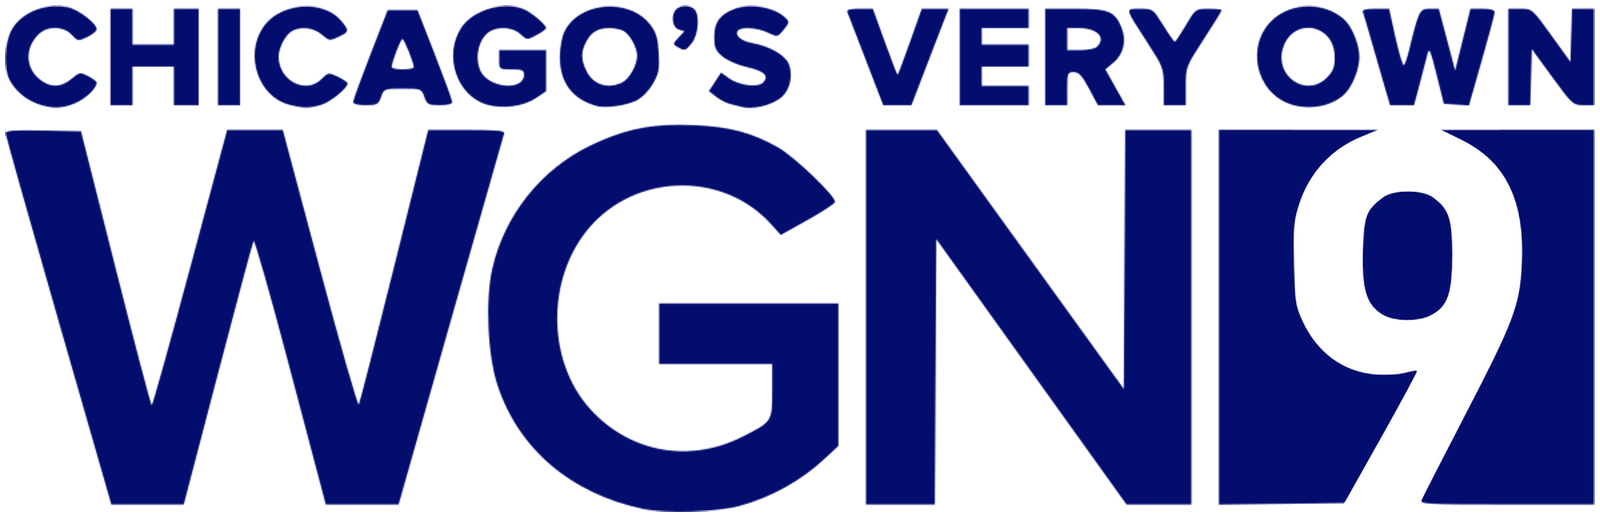 WGN News logo